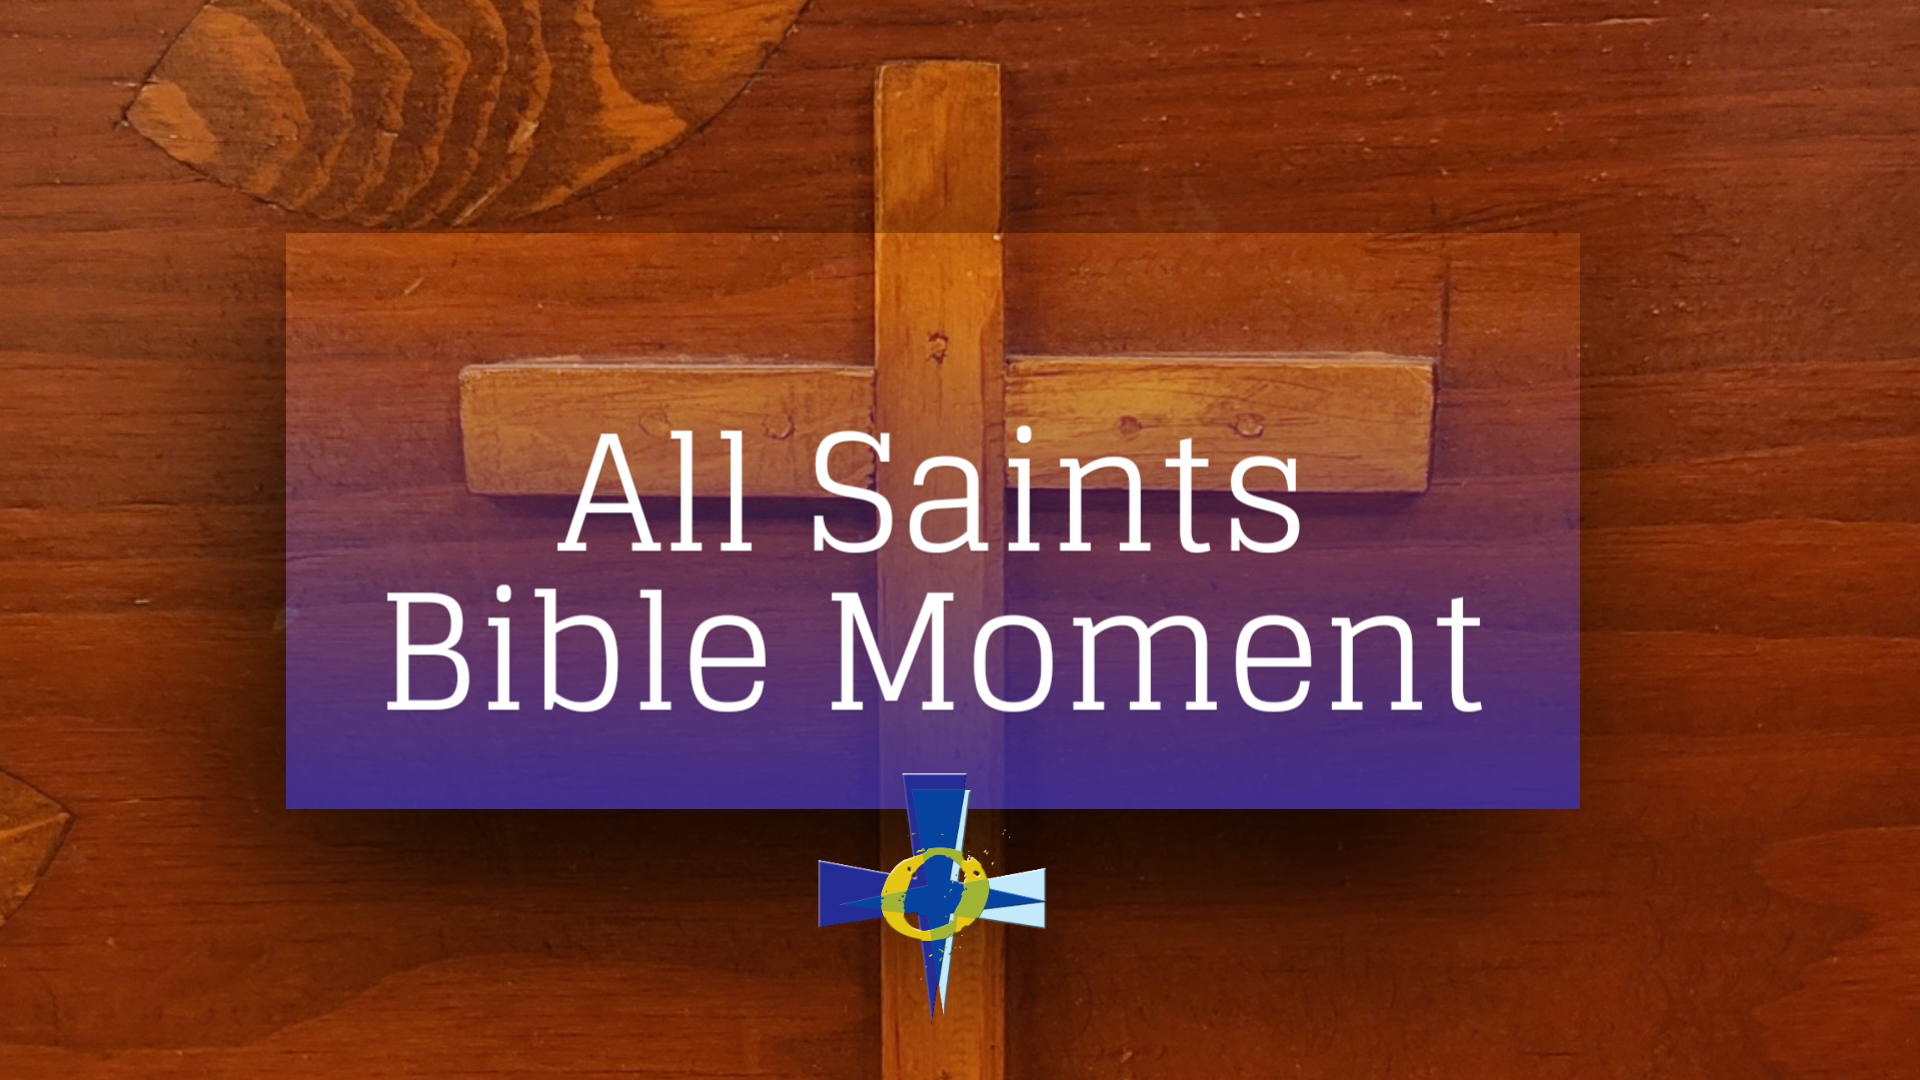 All Saints Bible Moment - Love